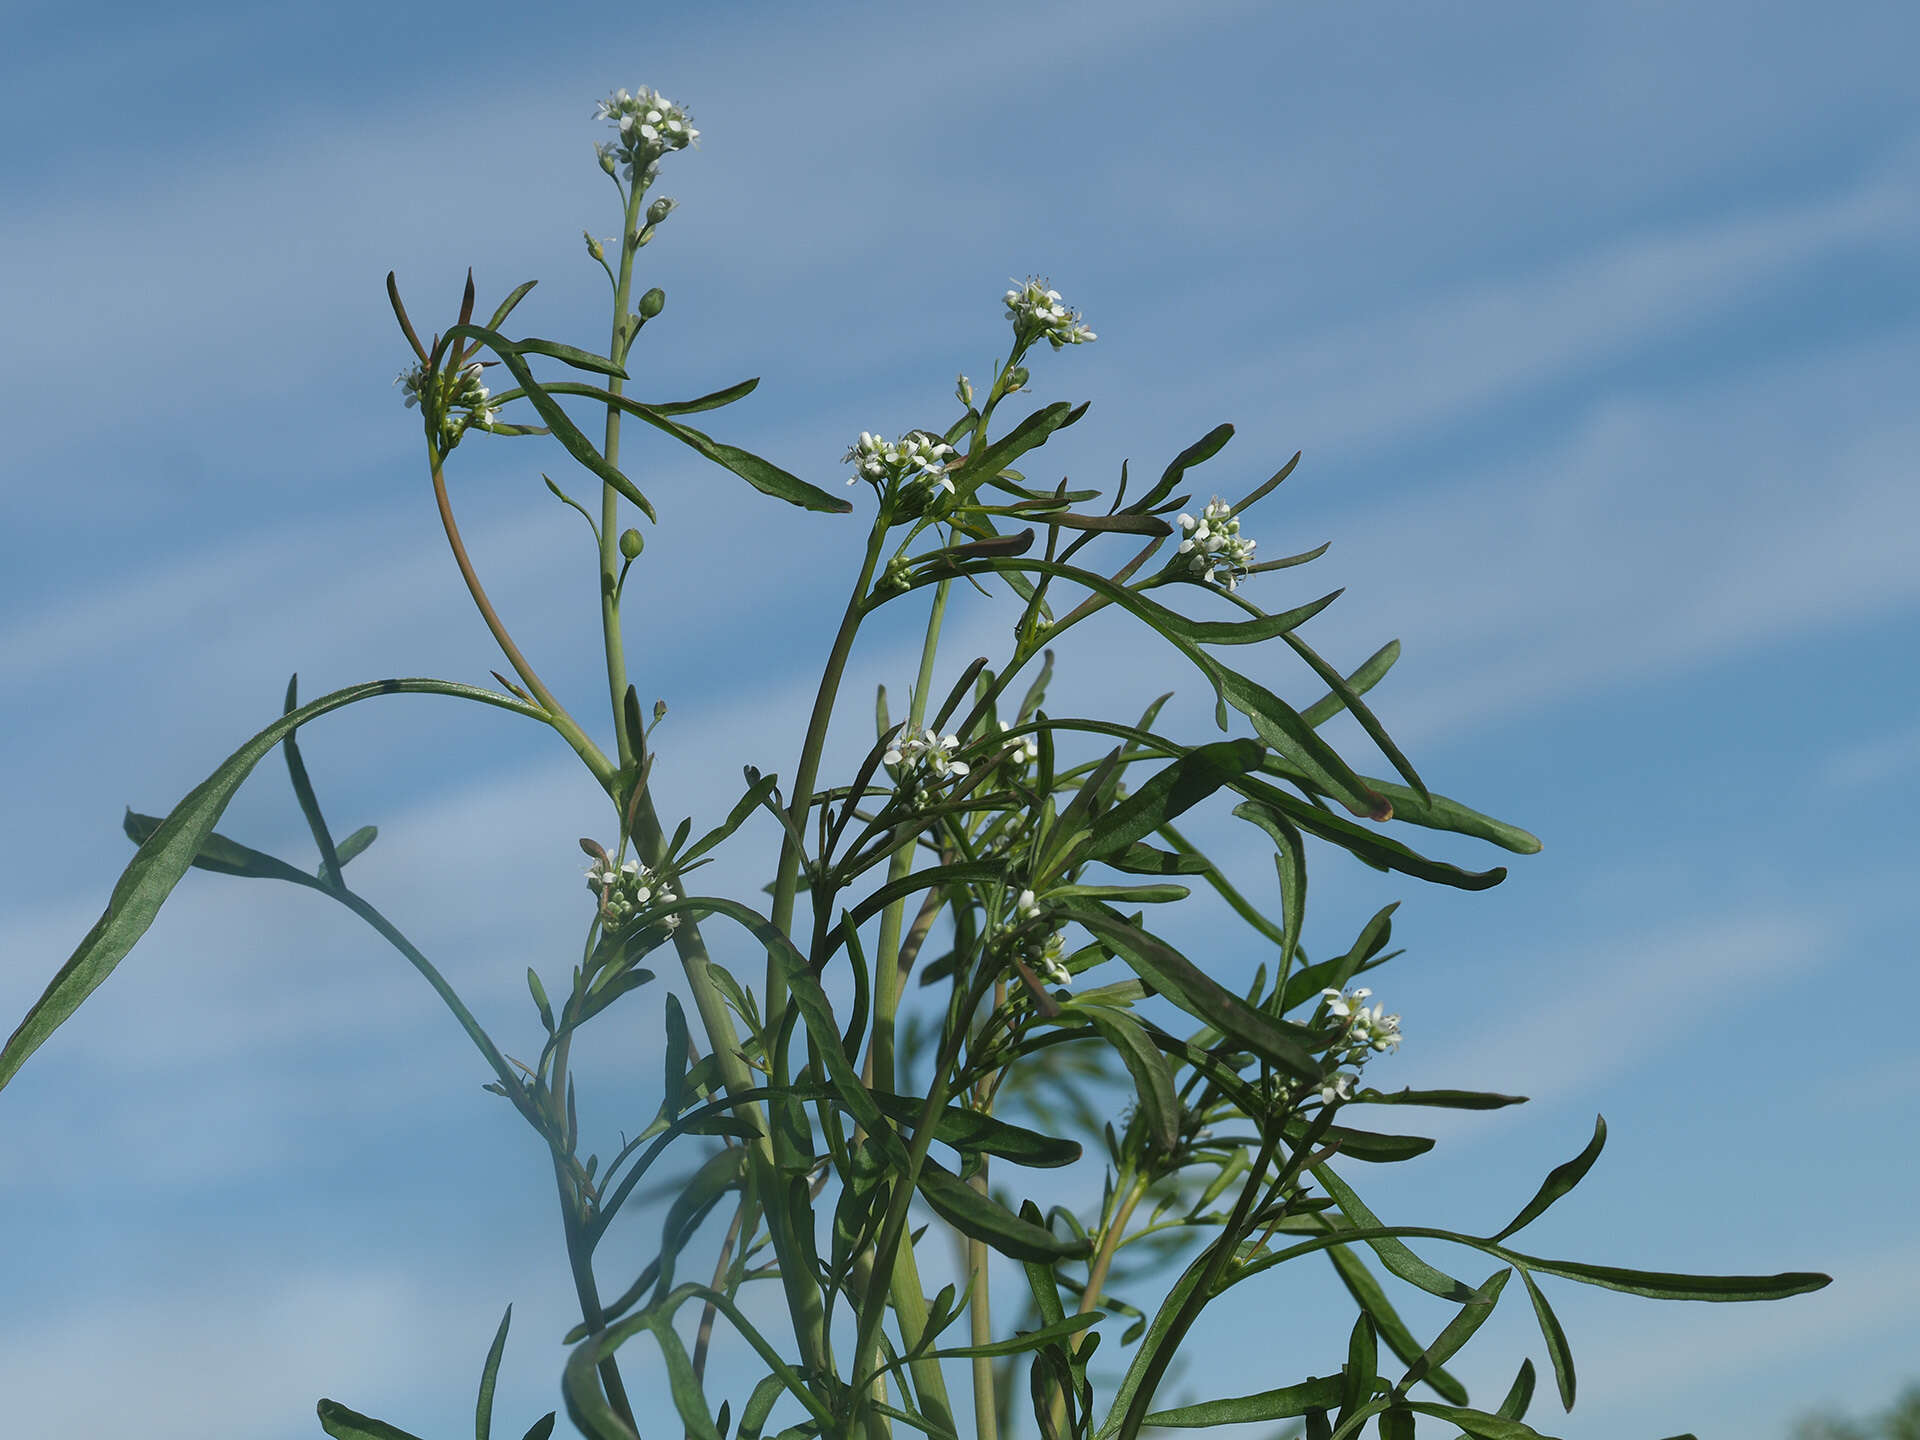 Image of gardencress pepperweed